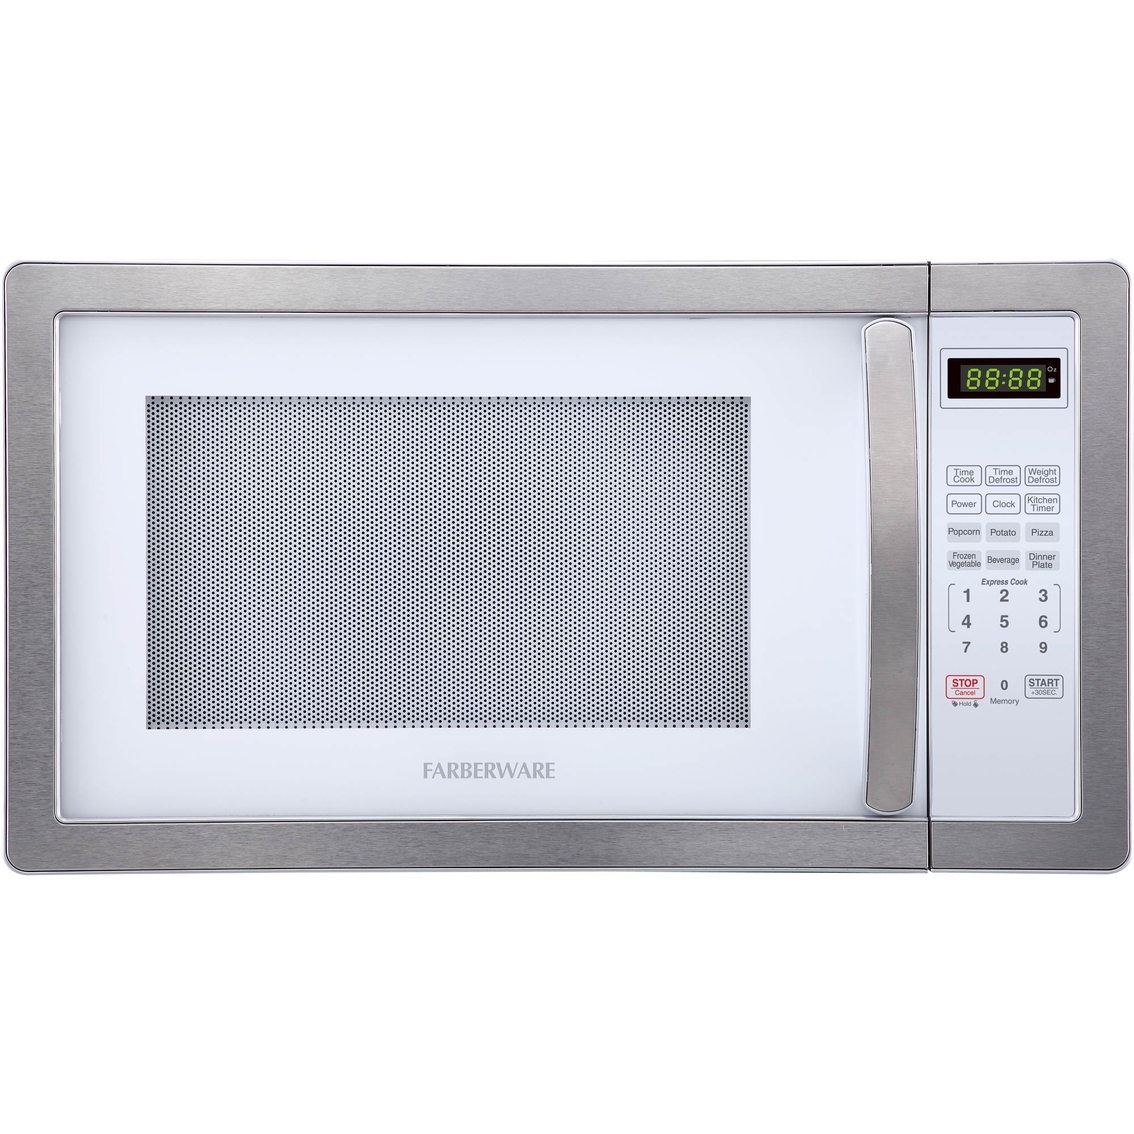 Farberware Classic 1.1 cu. ft. 1000 Watt Microwave Oven